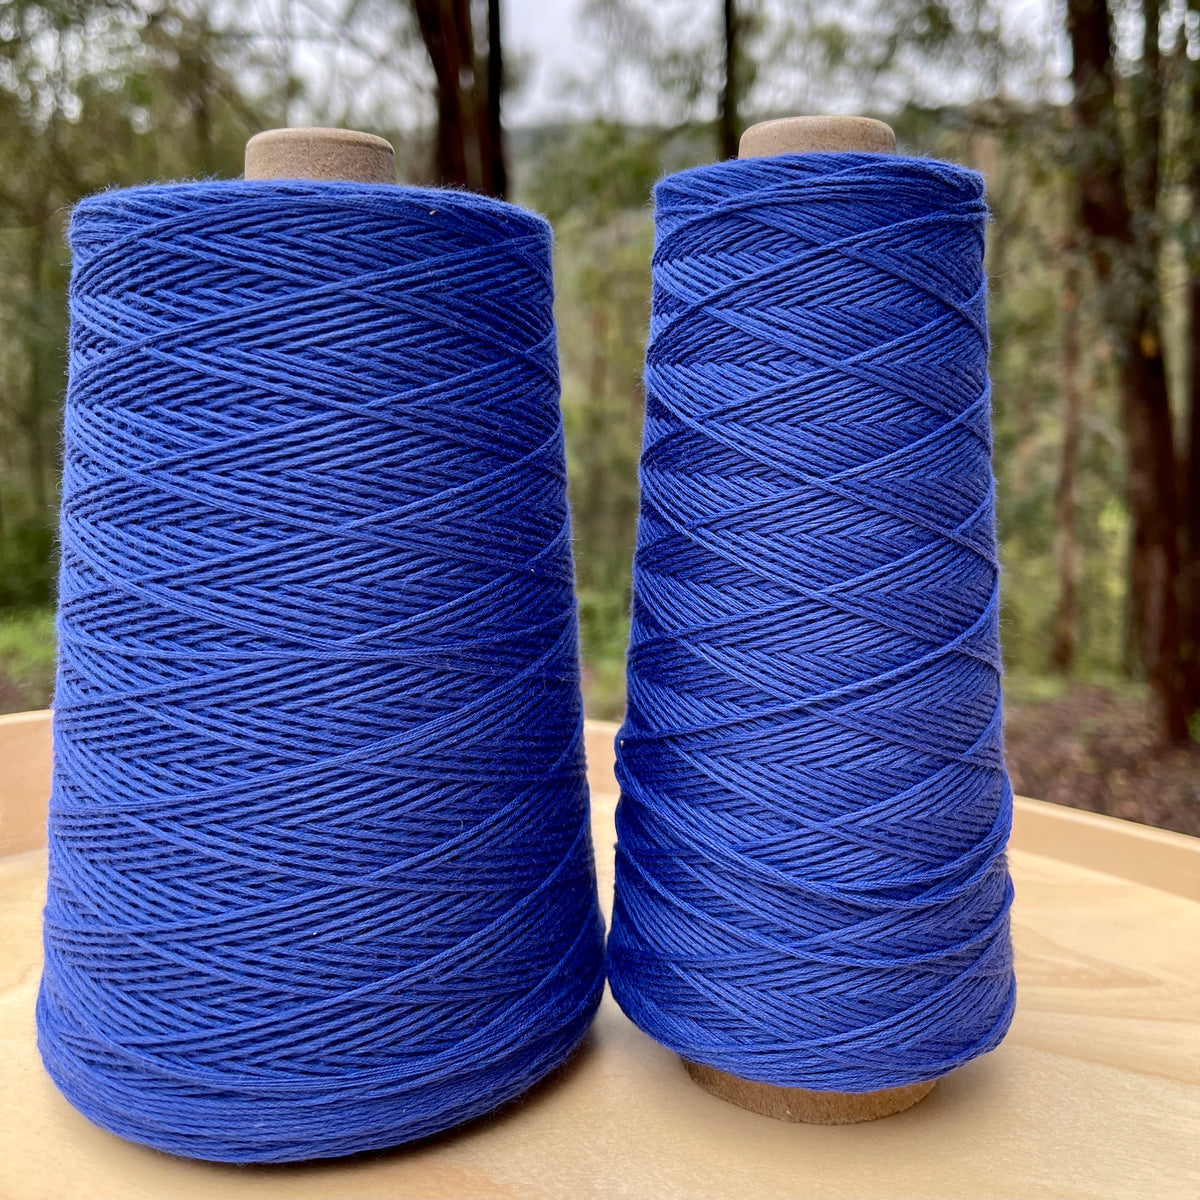 Ada Fibres Australian Cotton Ne 8/4 Weaving and knitting yarn